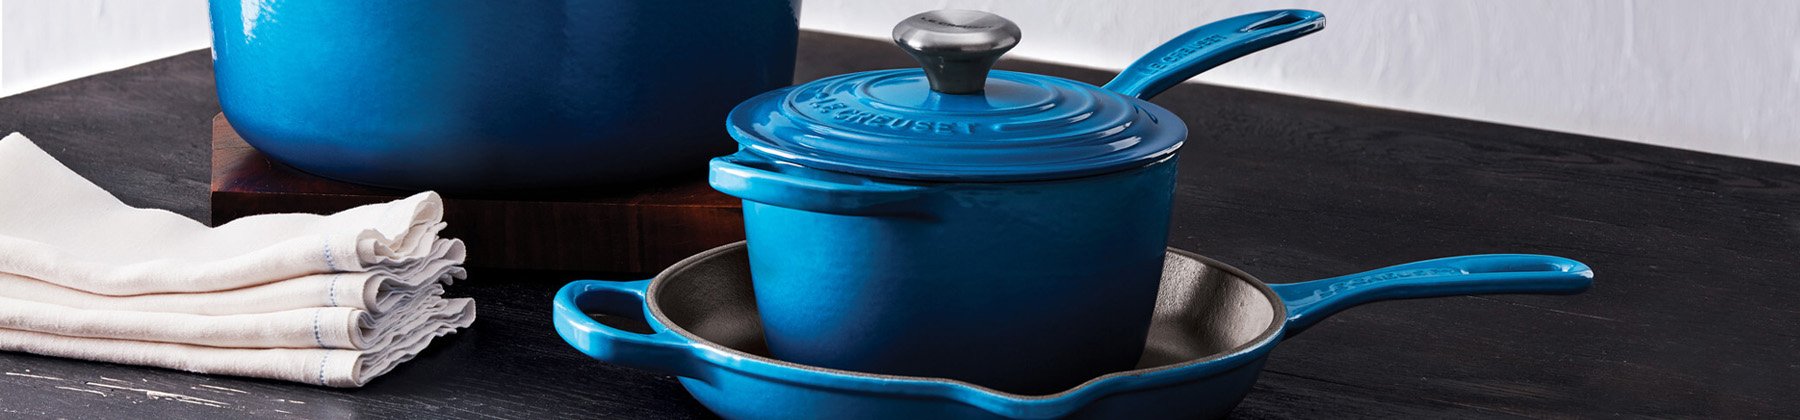 Photo of Le Creuset blue cookware set.